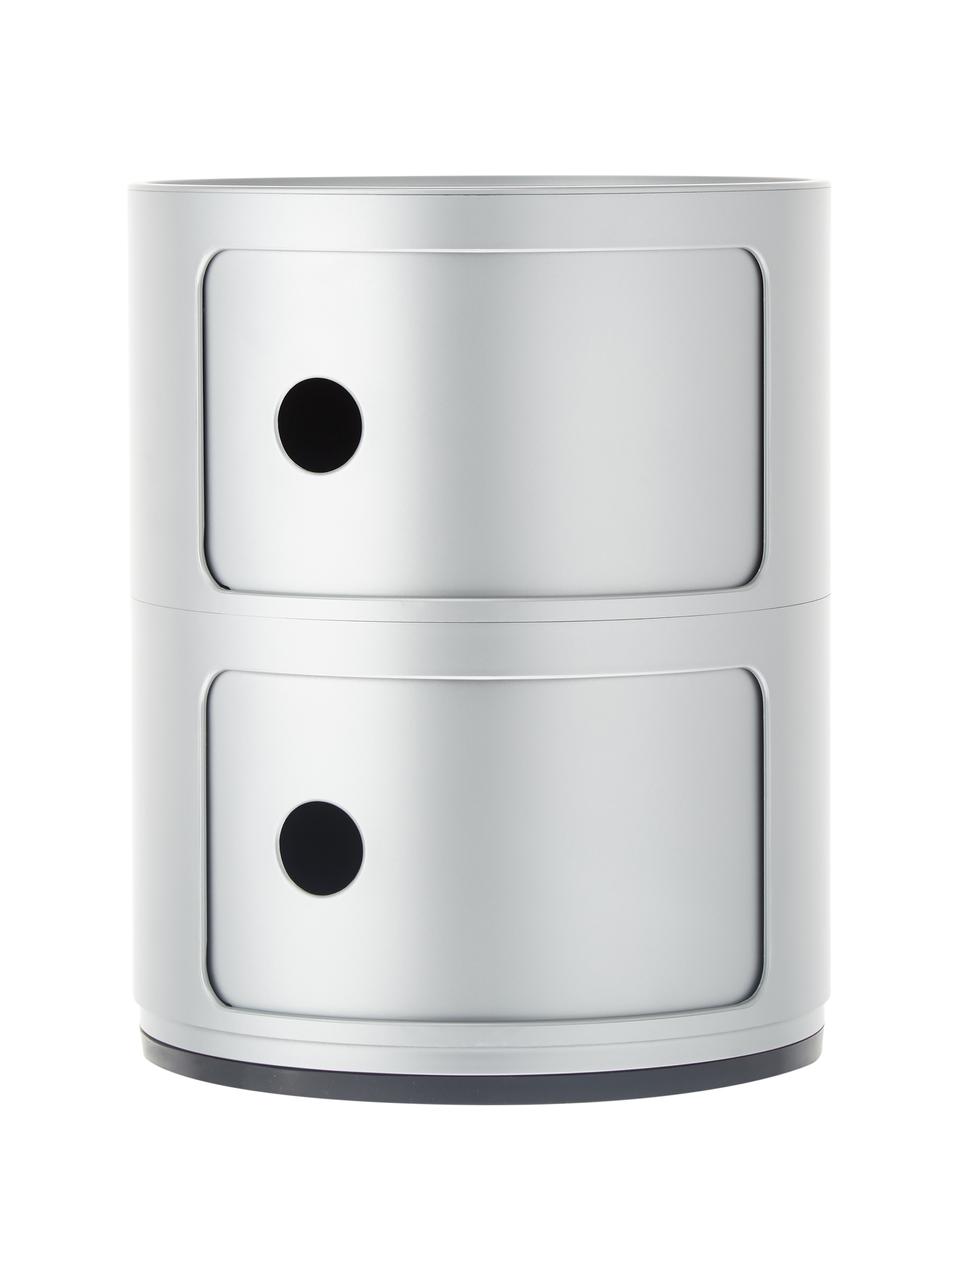 COMPONIBILI Classic in Silber, 2 Module, Kunststoff (ABS), lackiert, Greenguard-zertifiziert, Silber, Ø 32 x H 40 cm